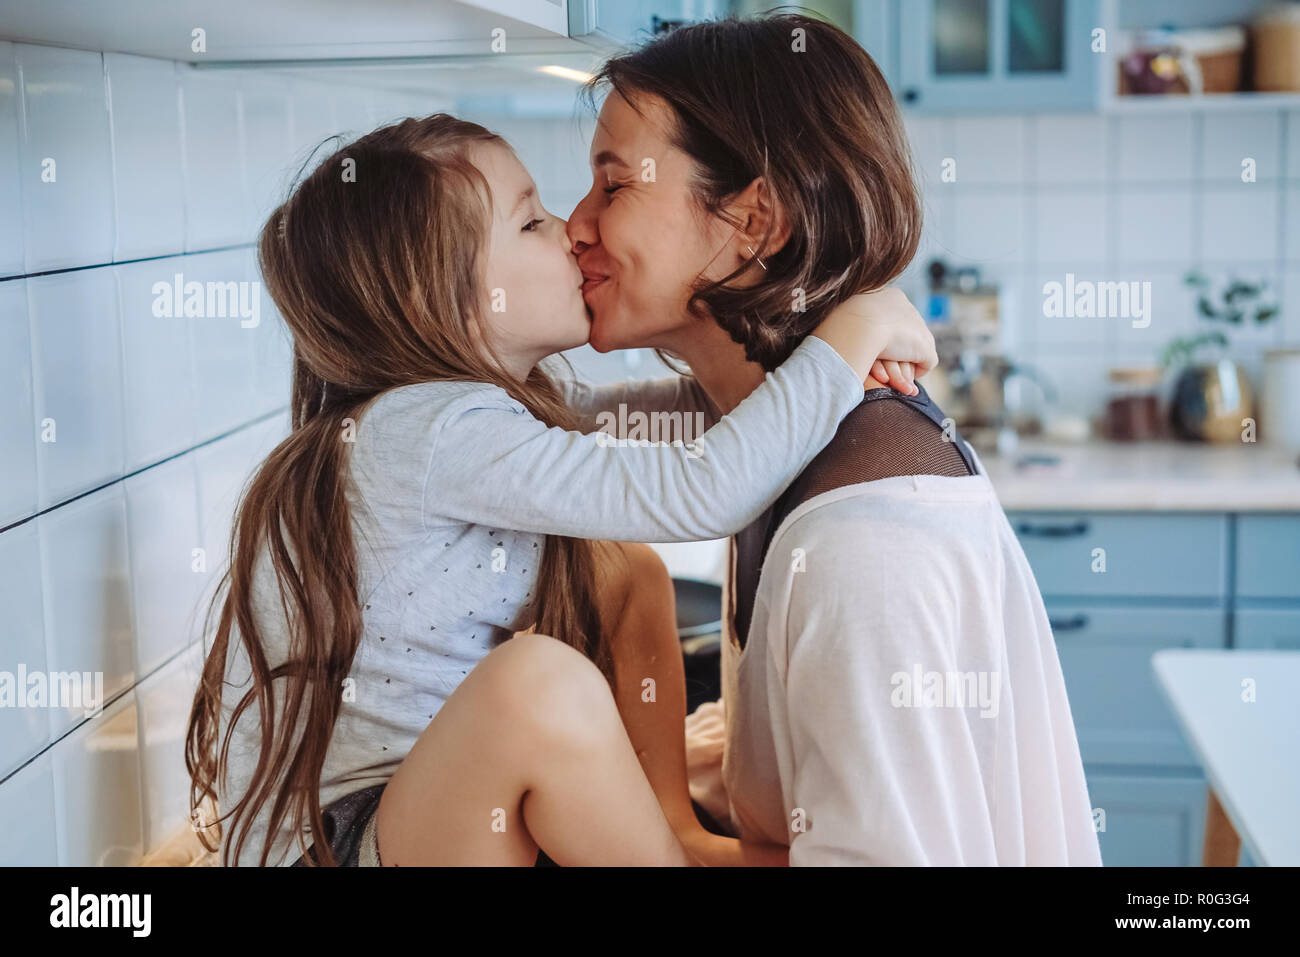 Папа мама лижет дочке. Мама целует дочь. Мама и дочь поцелуй с языком. Мама с дочкой поцелуй. Мама целуется с дочкой.